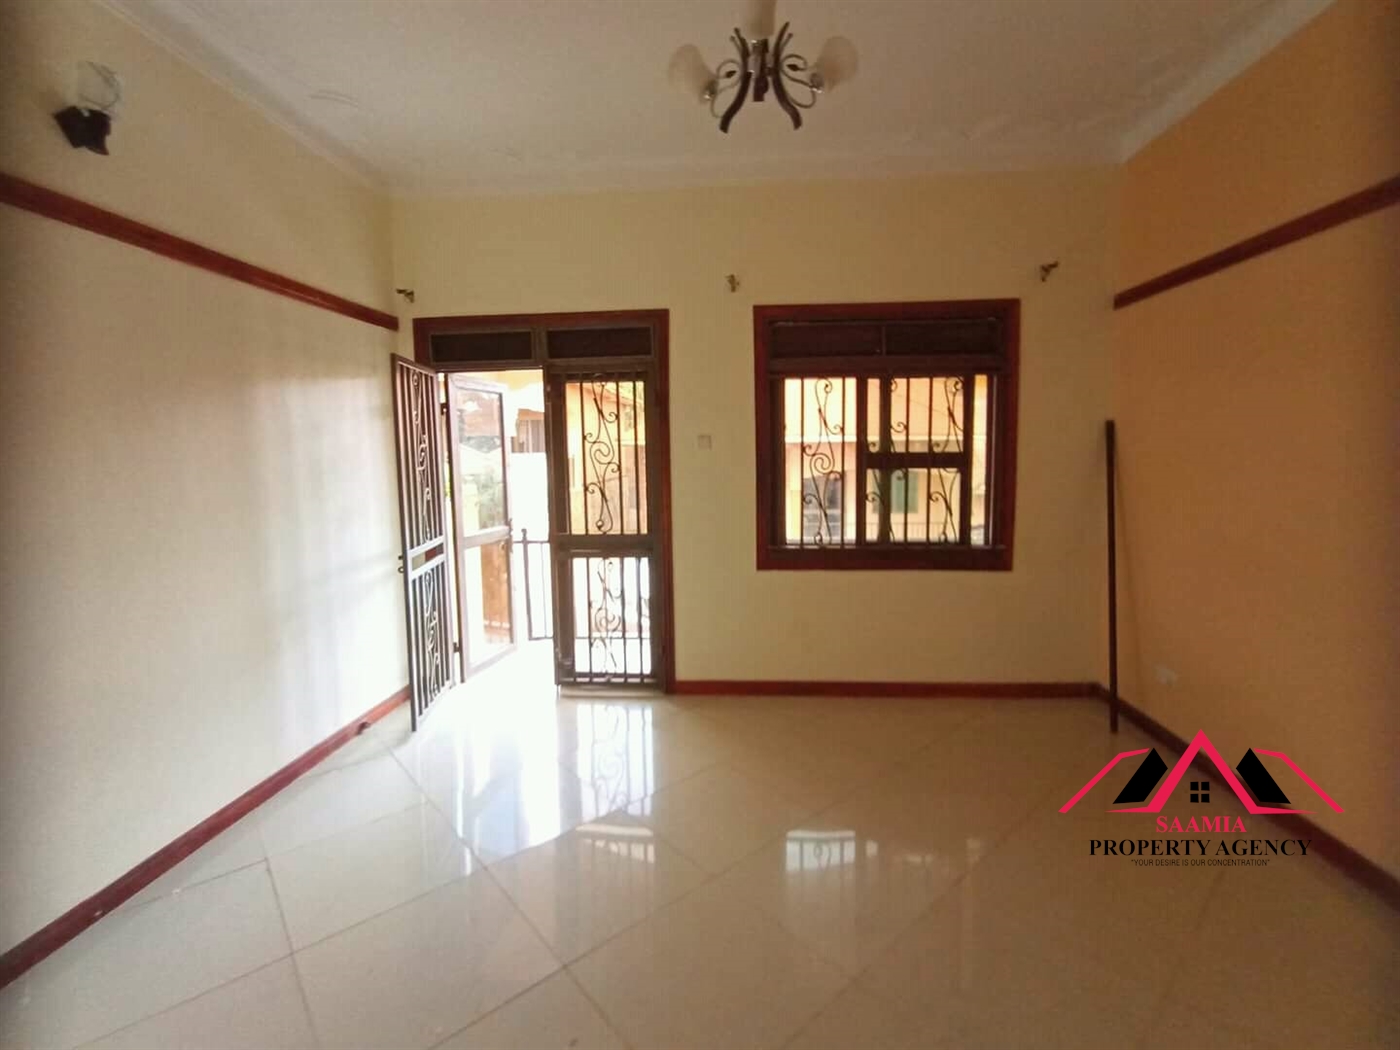 Apartment for rent in Zana Kampala